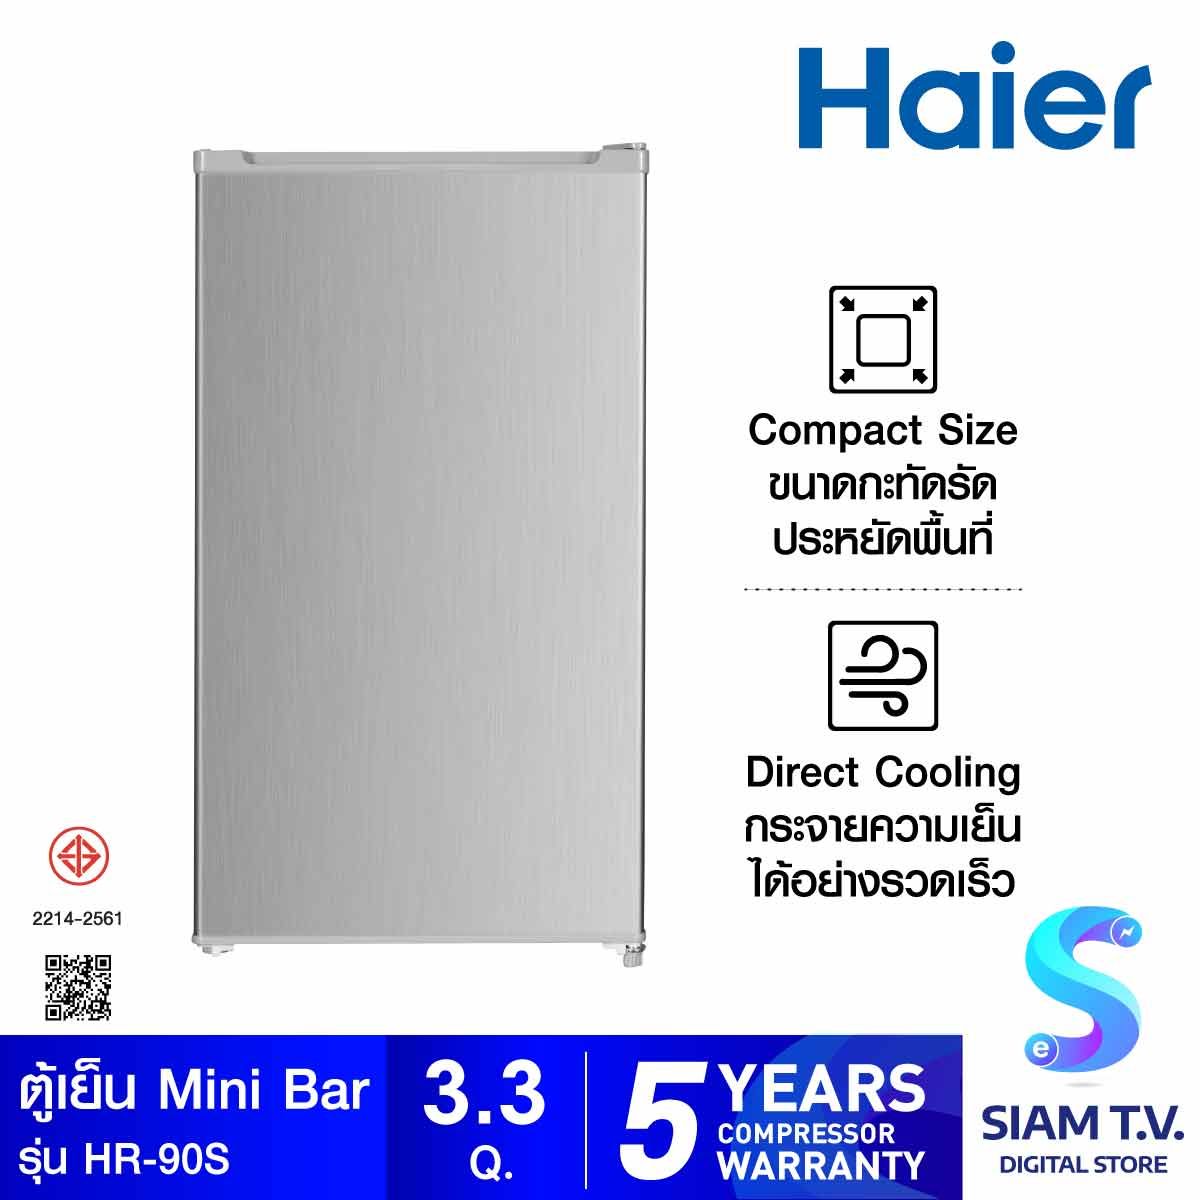 HAIER ตู้เย็นมินิบาร์ 3.3 Q สีเงิน รุ่น HR-90S